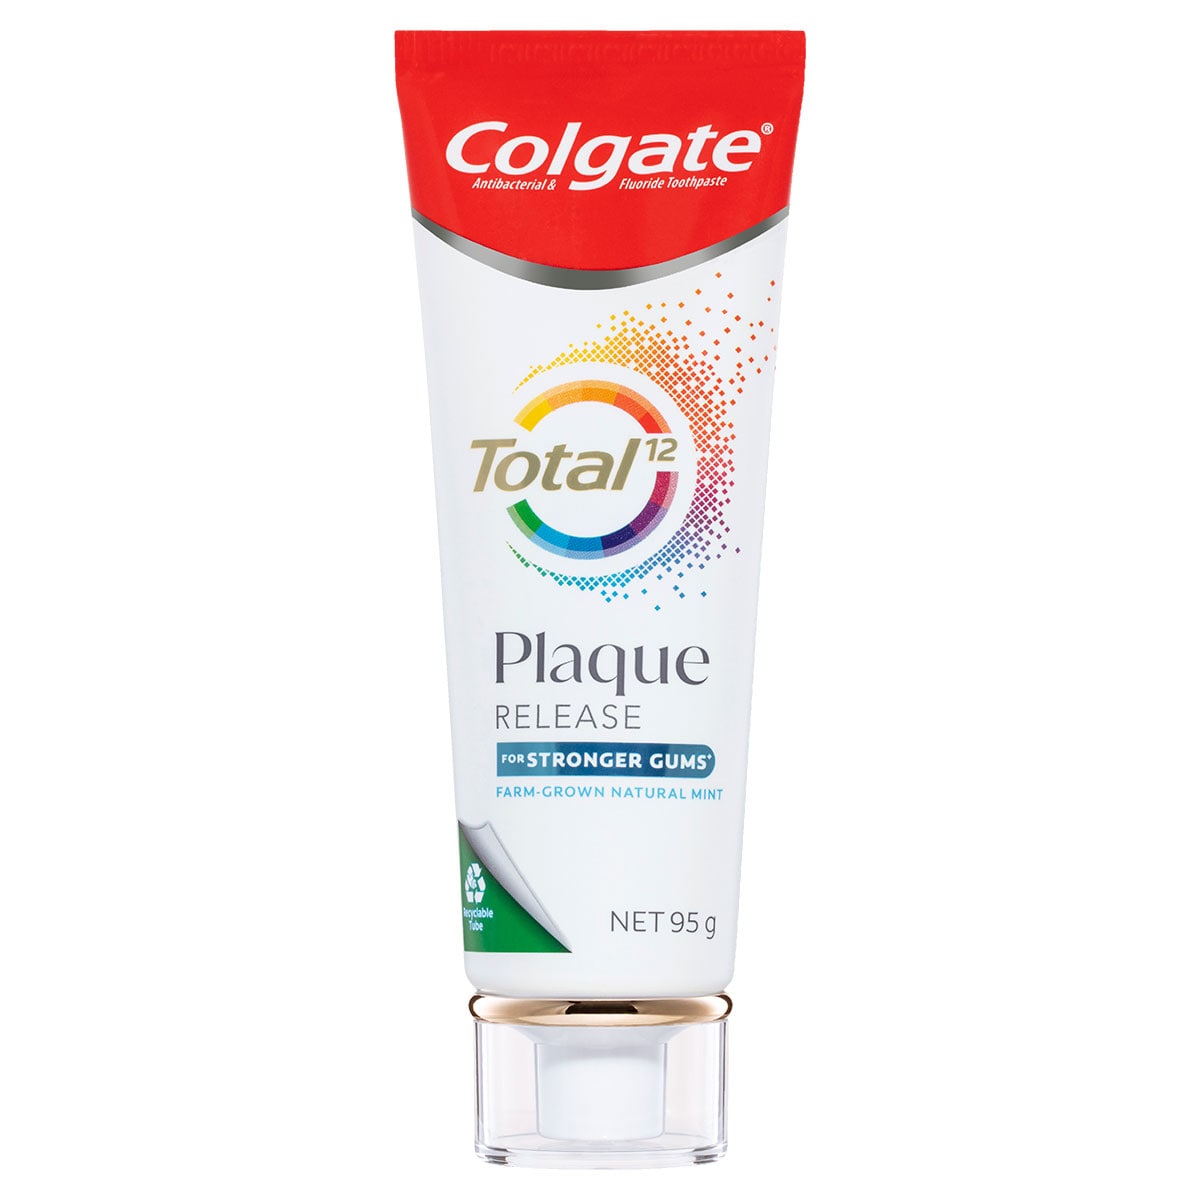 Colgate Total Plaque Release Toothpaste Farm-Grown Natural Mint 95g